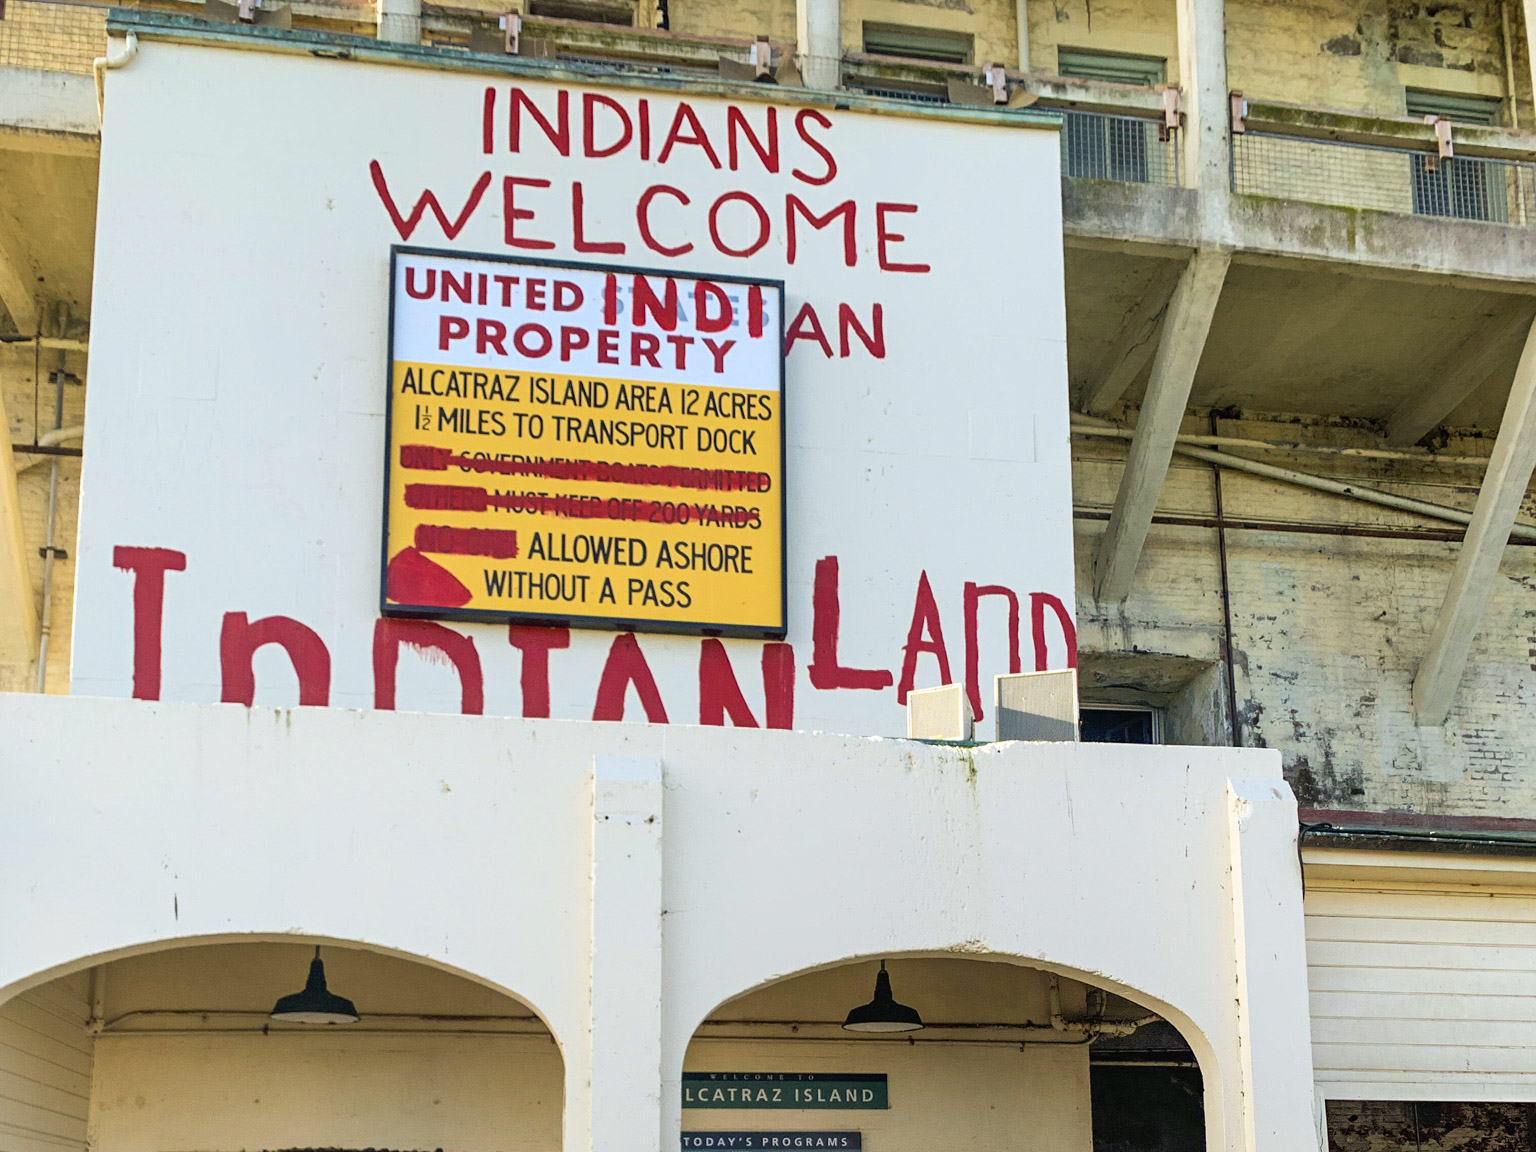 'Indians Welcome' - Alcatraz Island